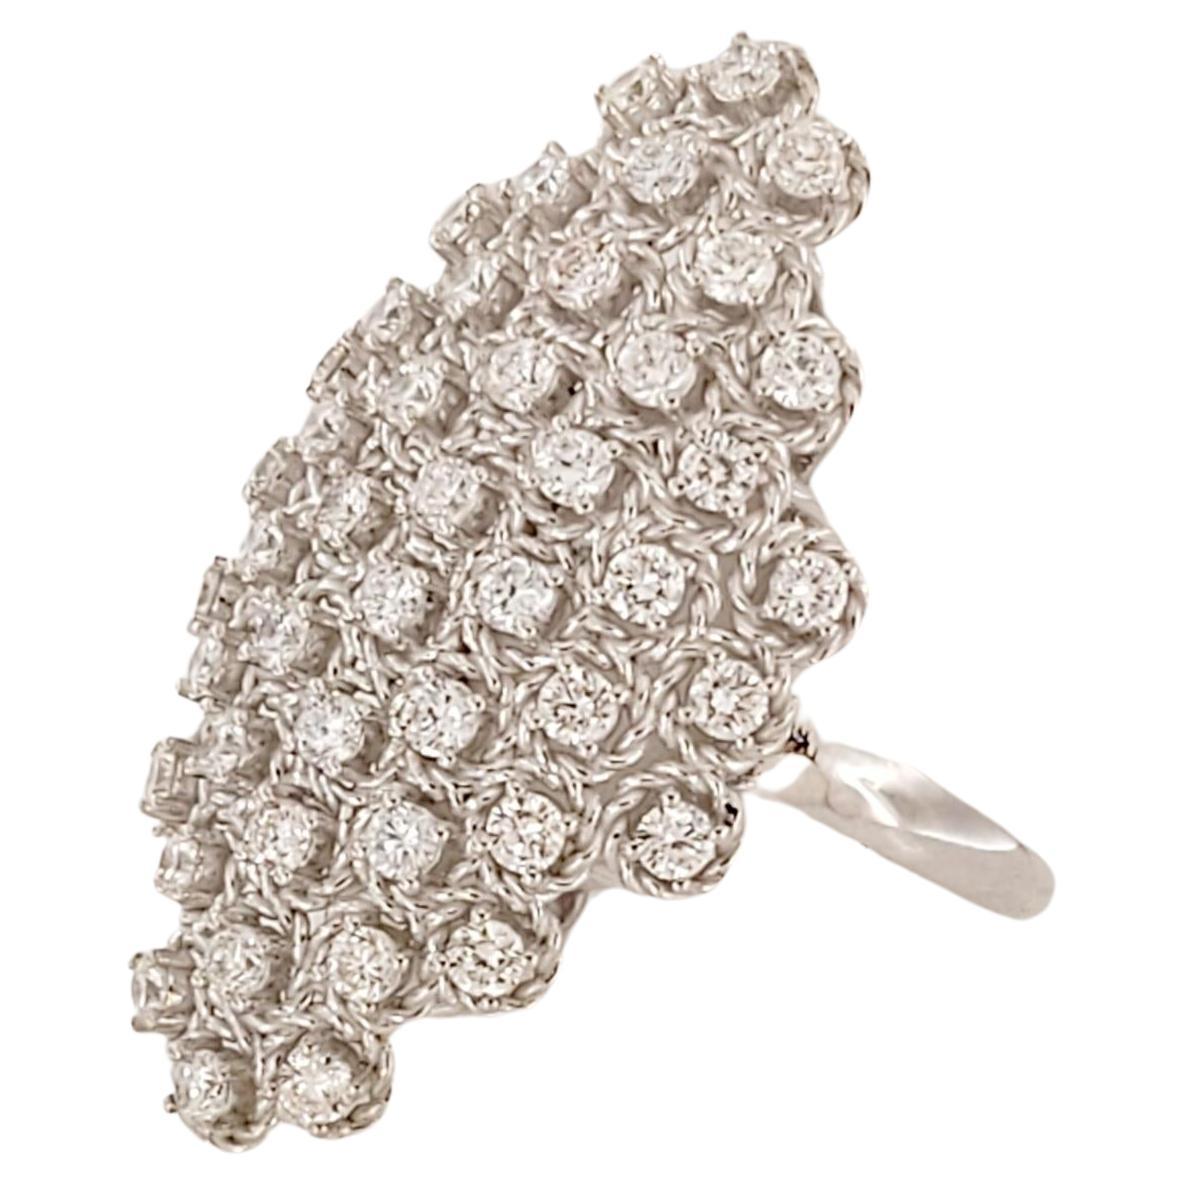 14K White Gold Ring with Diamonds
Gender Women  
Mint Condition  
Ring Size 7.5
Diamonds 1.80ct
Diamond sets 45 pcs 
Diamond Clarity VS 
Color Grade G
Retail Price $ 5.900